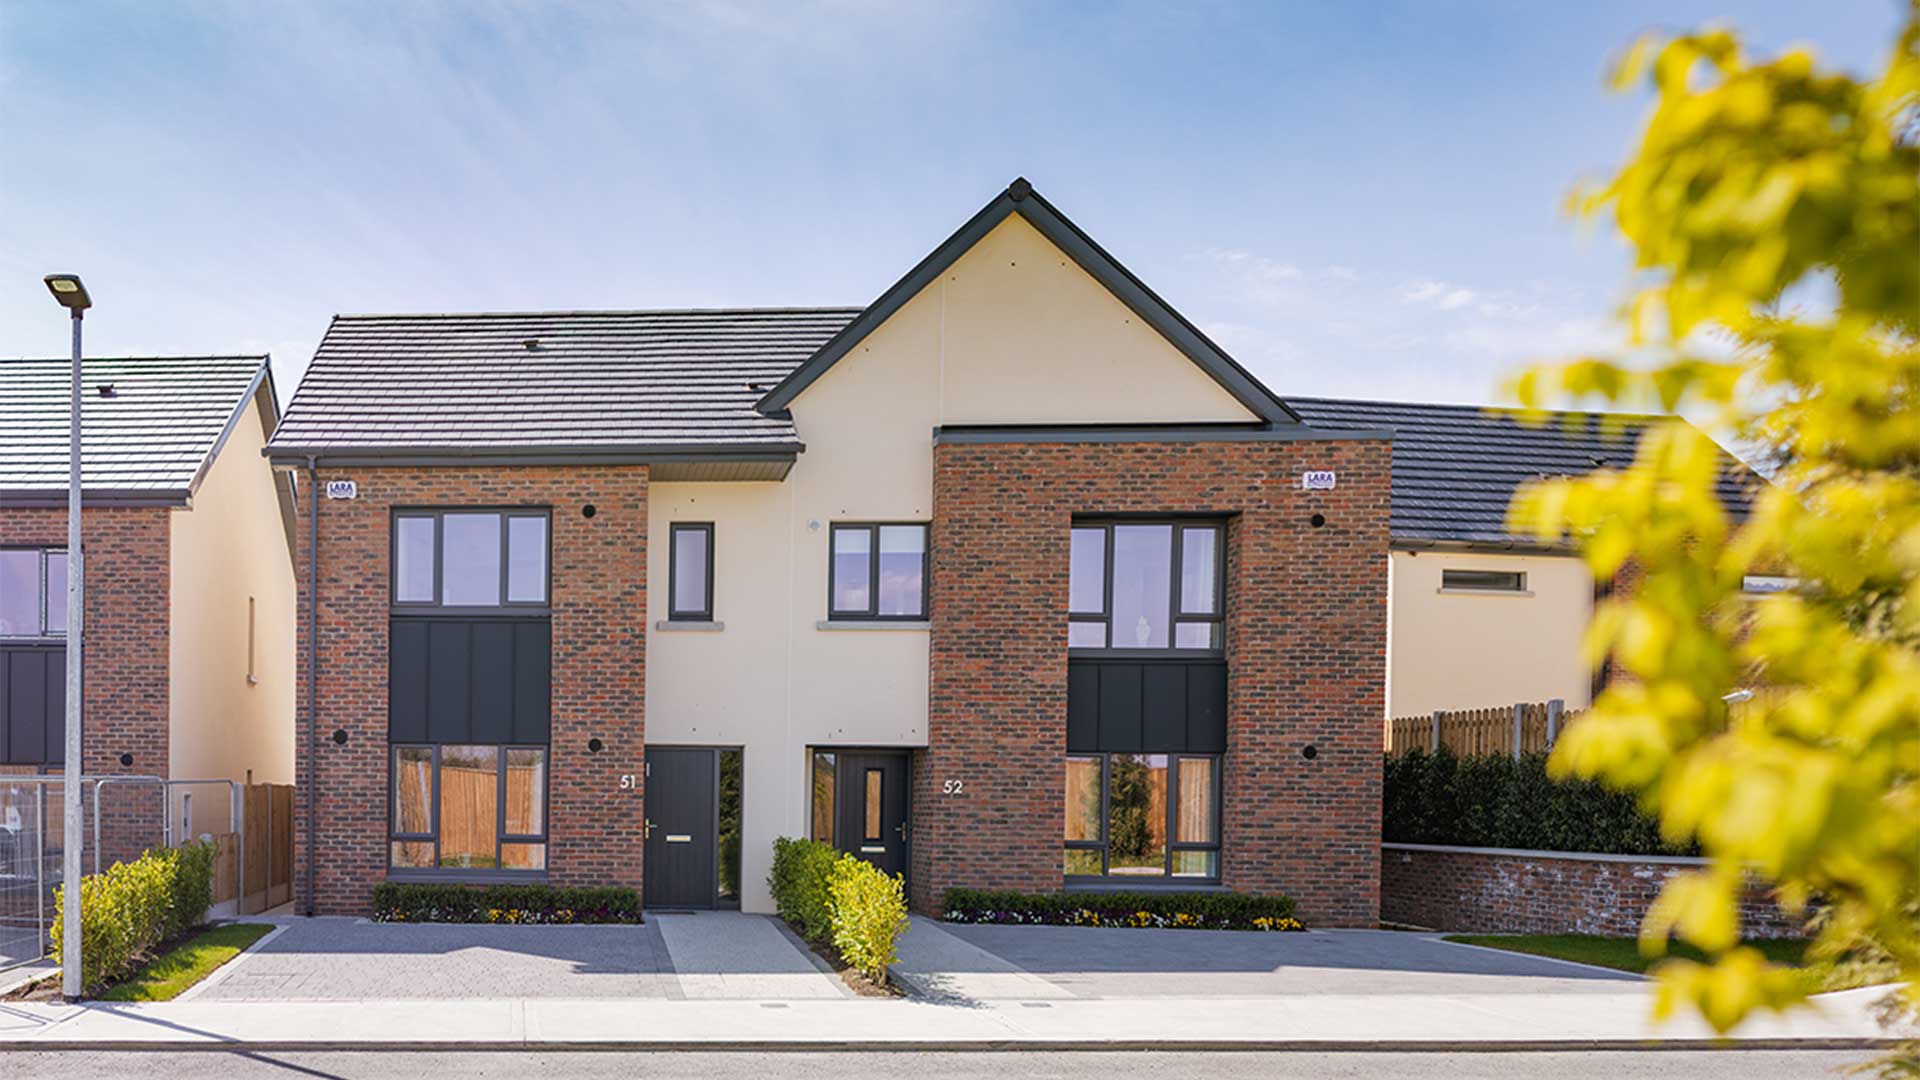 Green Field Housing Development in Drogheda, Co. Louth